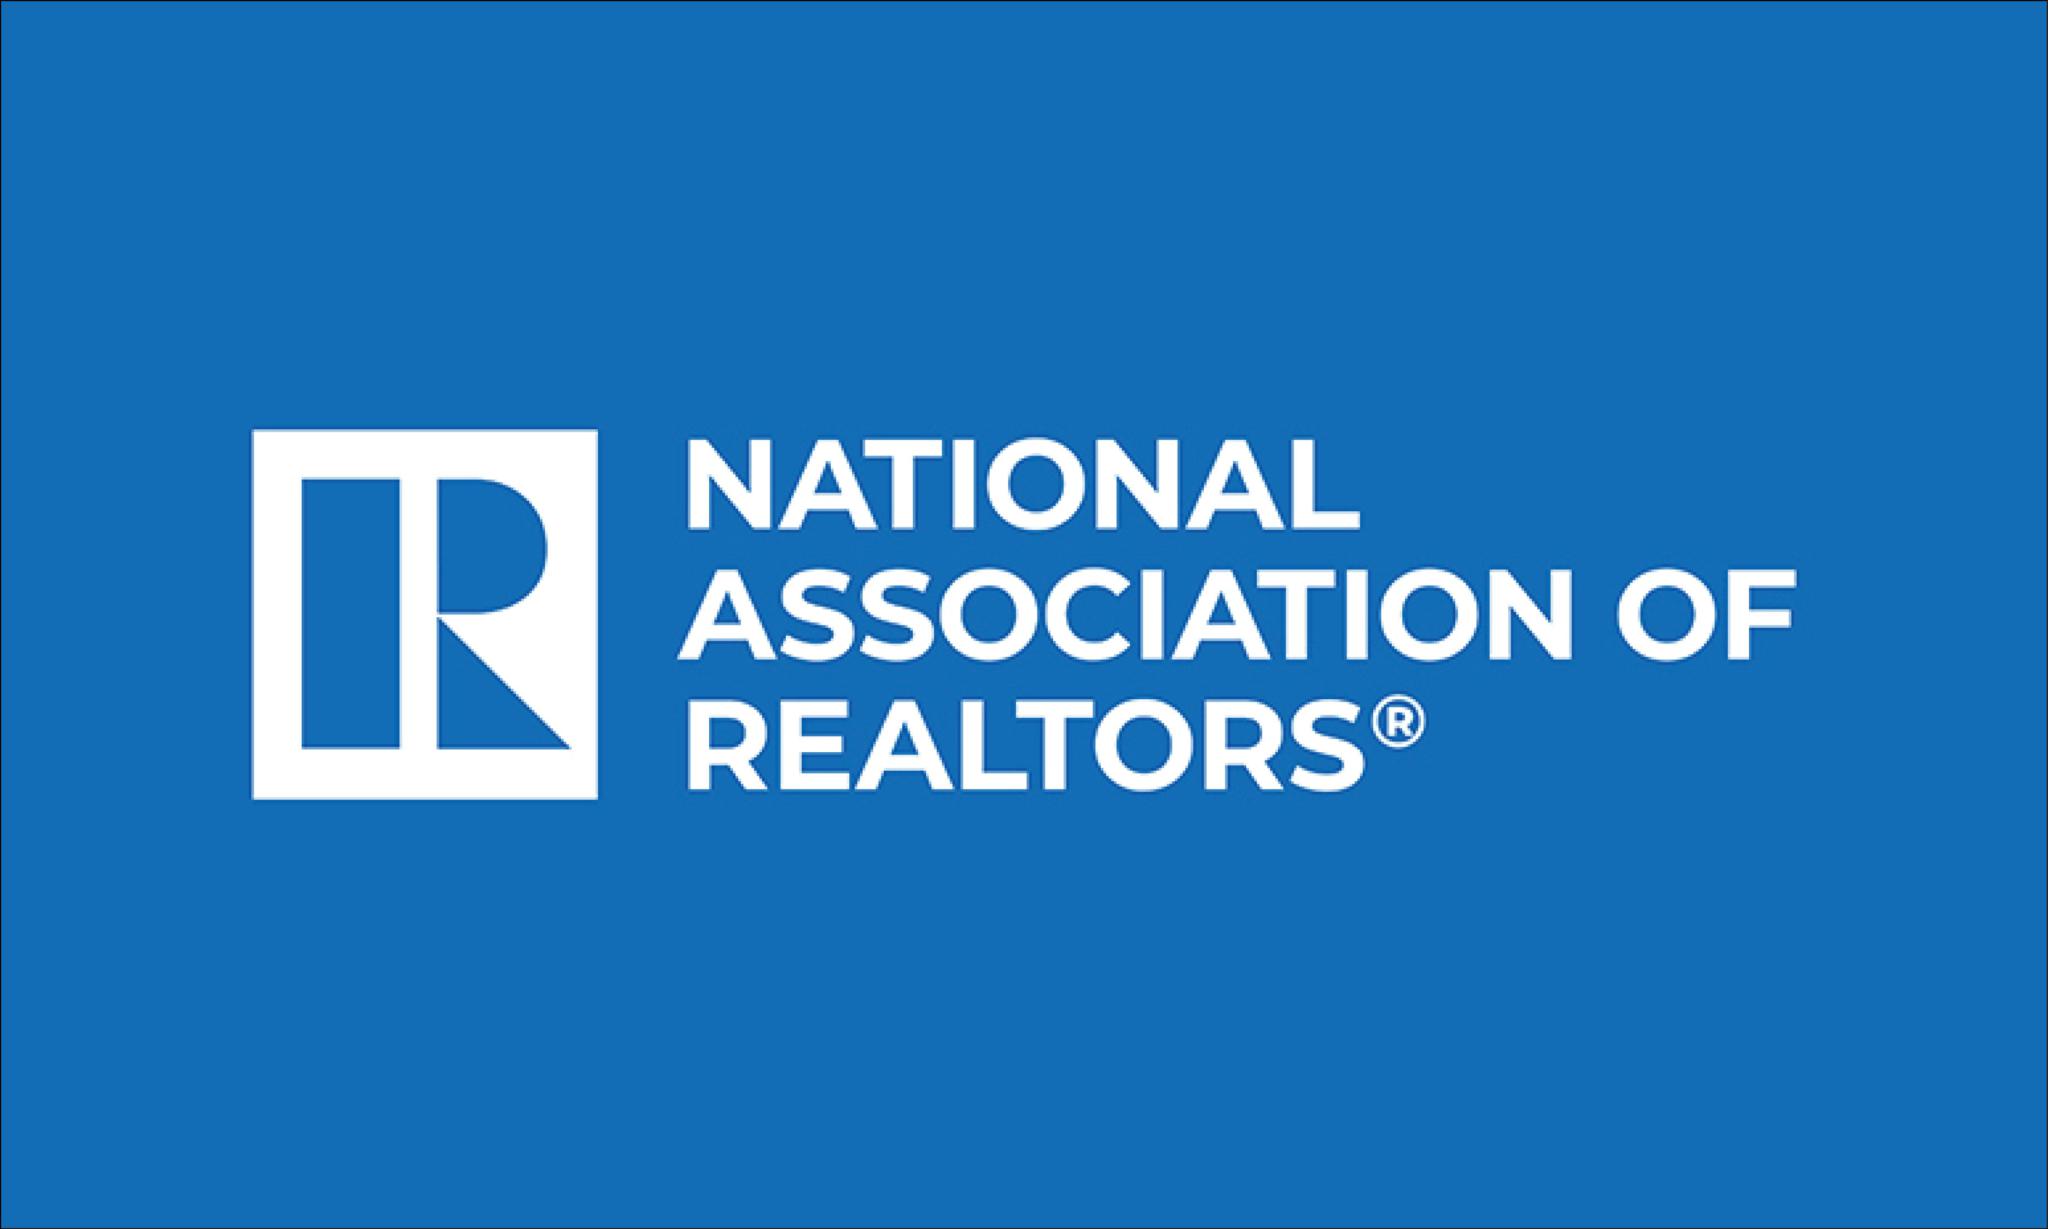 Image of the National Association of Realtors logo